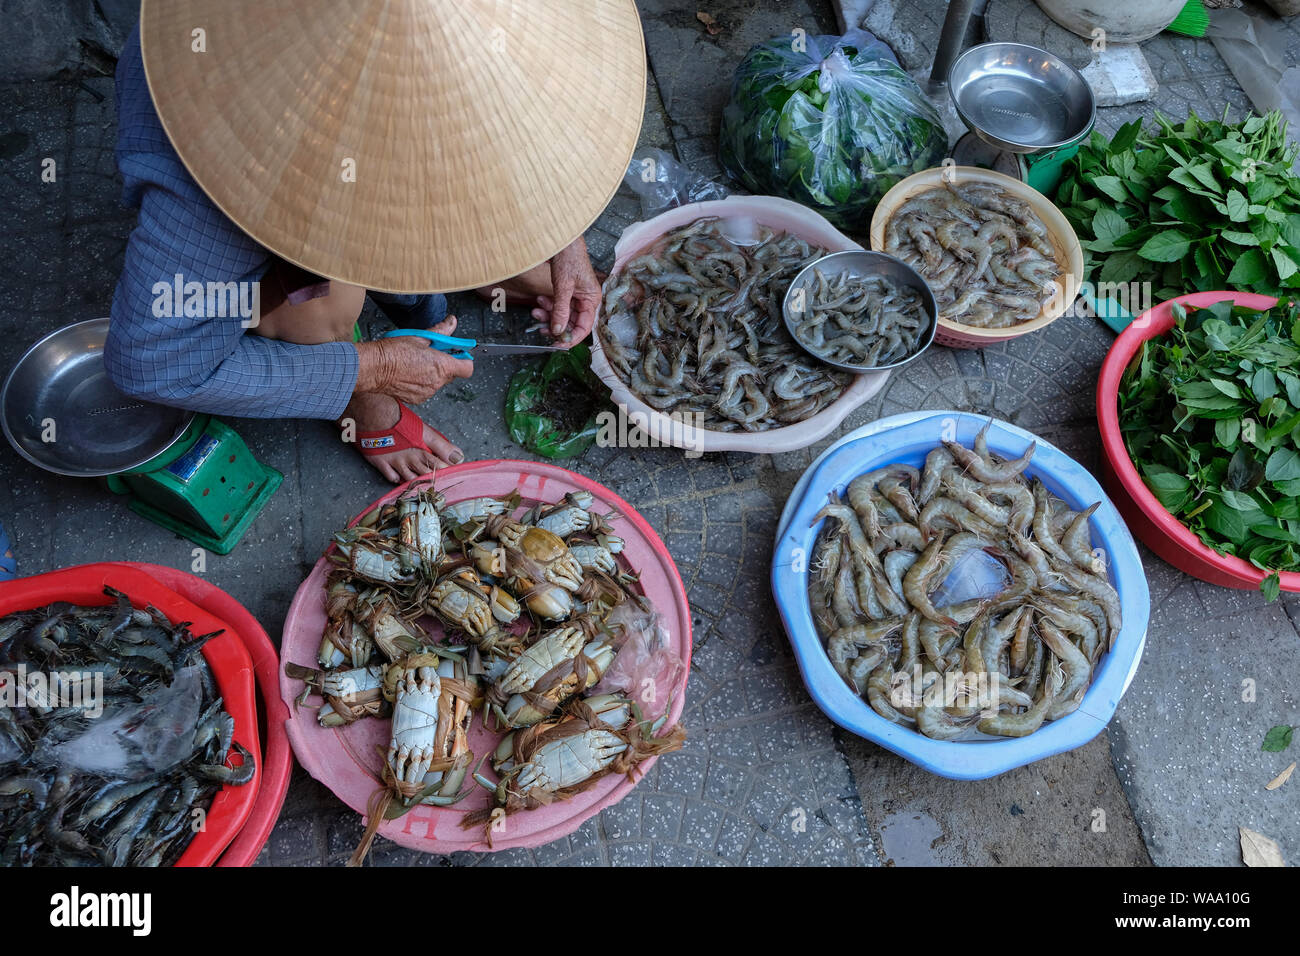 Hoi An, Vietnam - 17 agosto: pesce venditori sul mercato il 17 agosto 2018 a Hoi An, Vietnam. Foto Stock